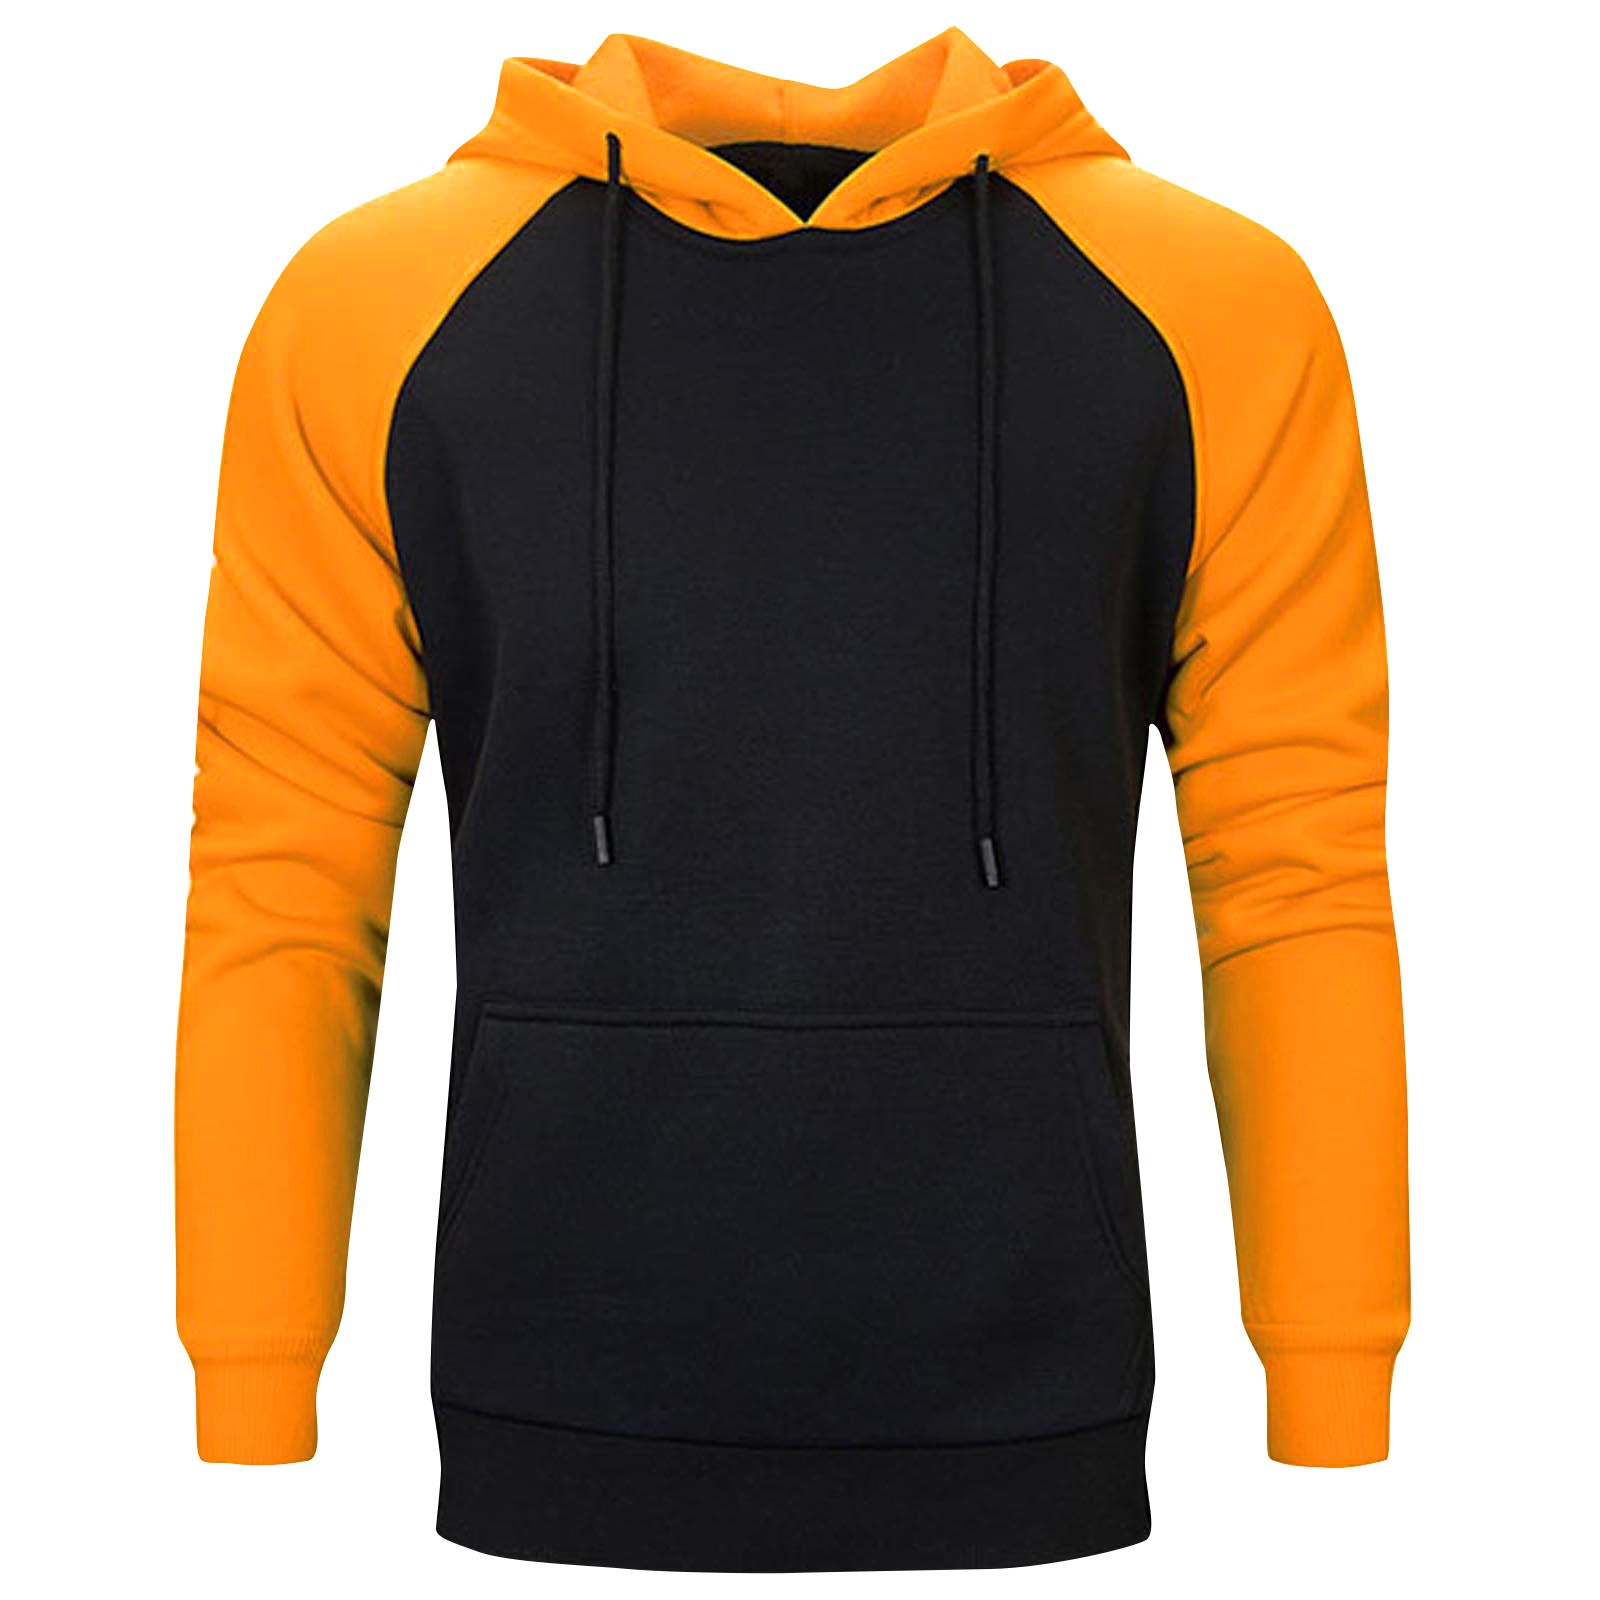 Odeerbi Hooded Sweatshirts for Men Hoodies Color Block Patchwork Blend Fleece Pullover Kanga ...